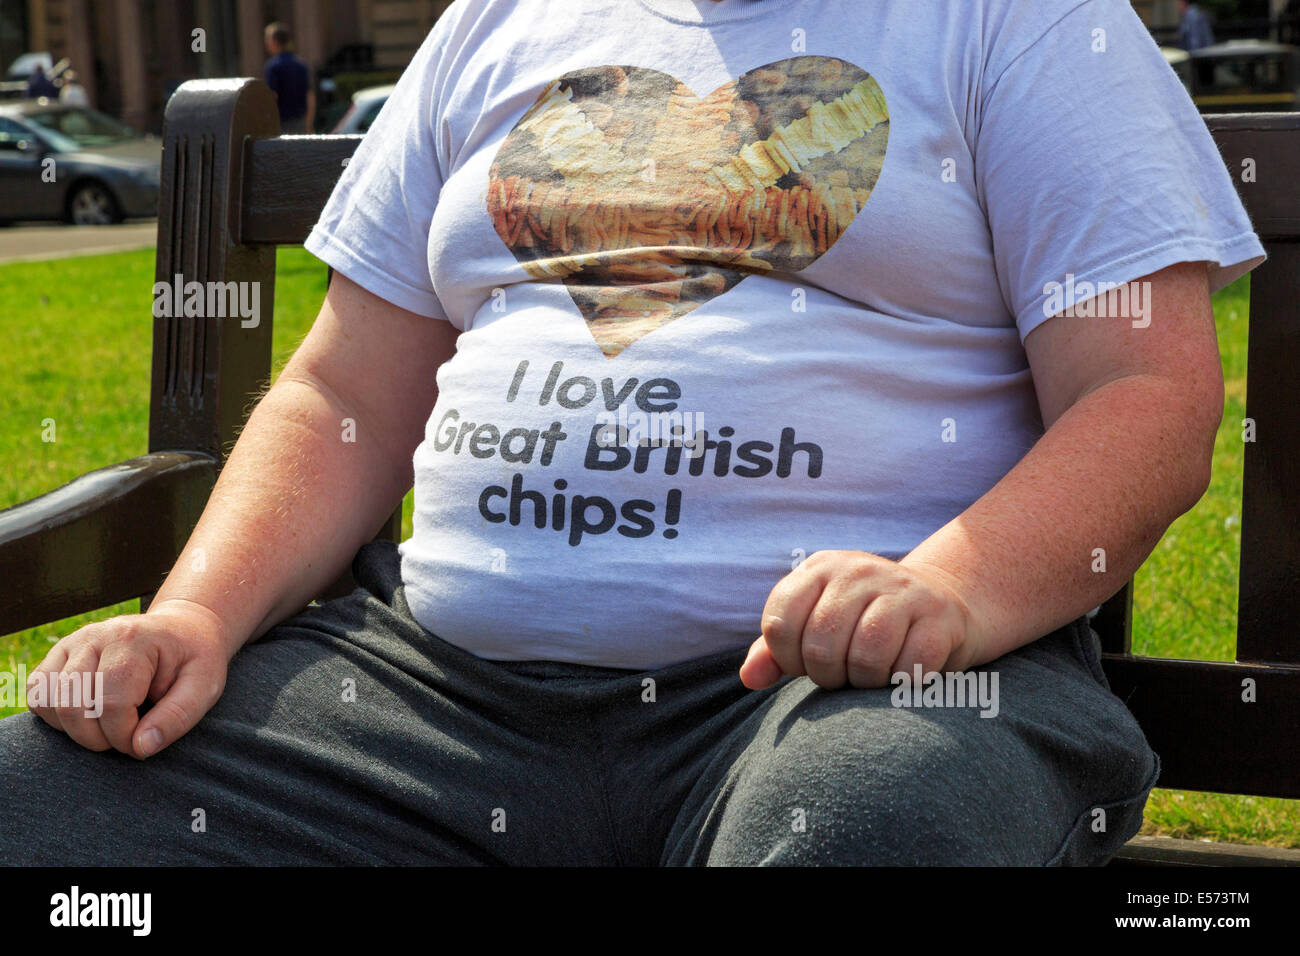 Overweight man wearing a tee shirt advertising chipped potatoes, Glasgow, Scotland, UK Stock Photo